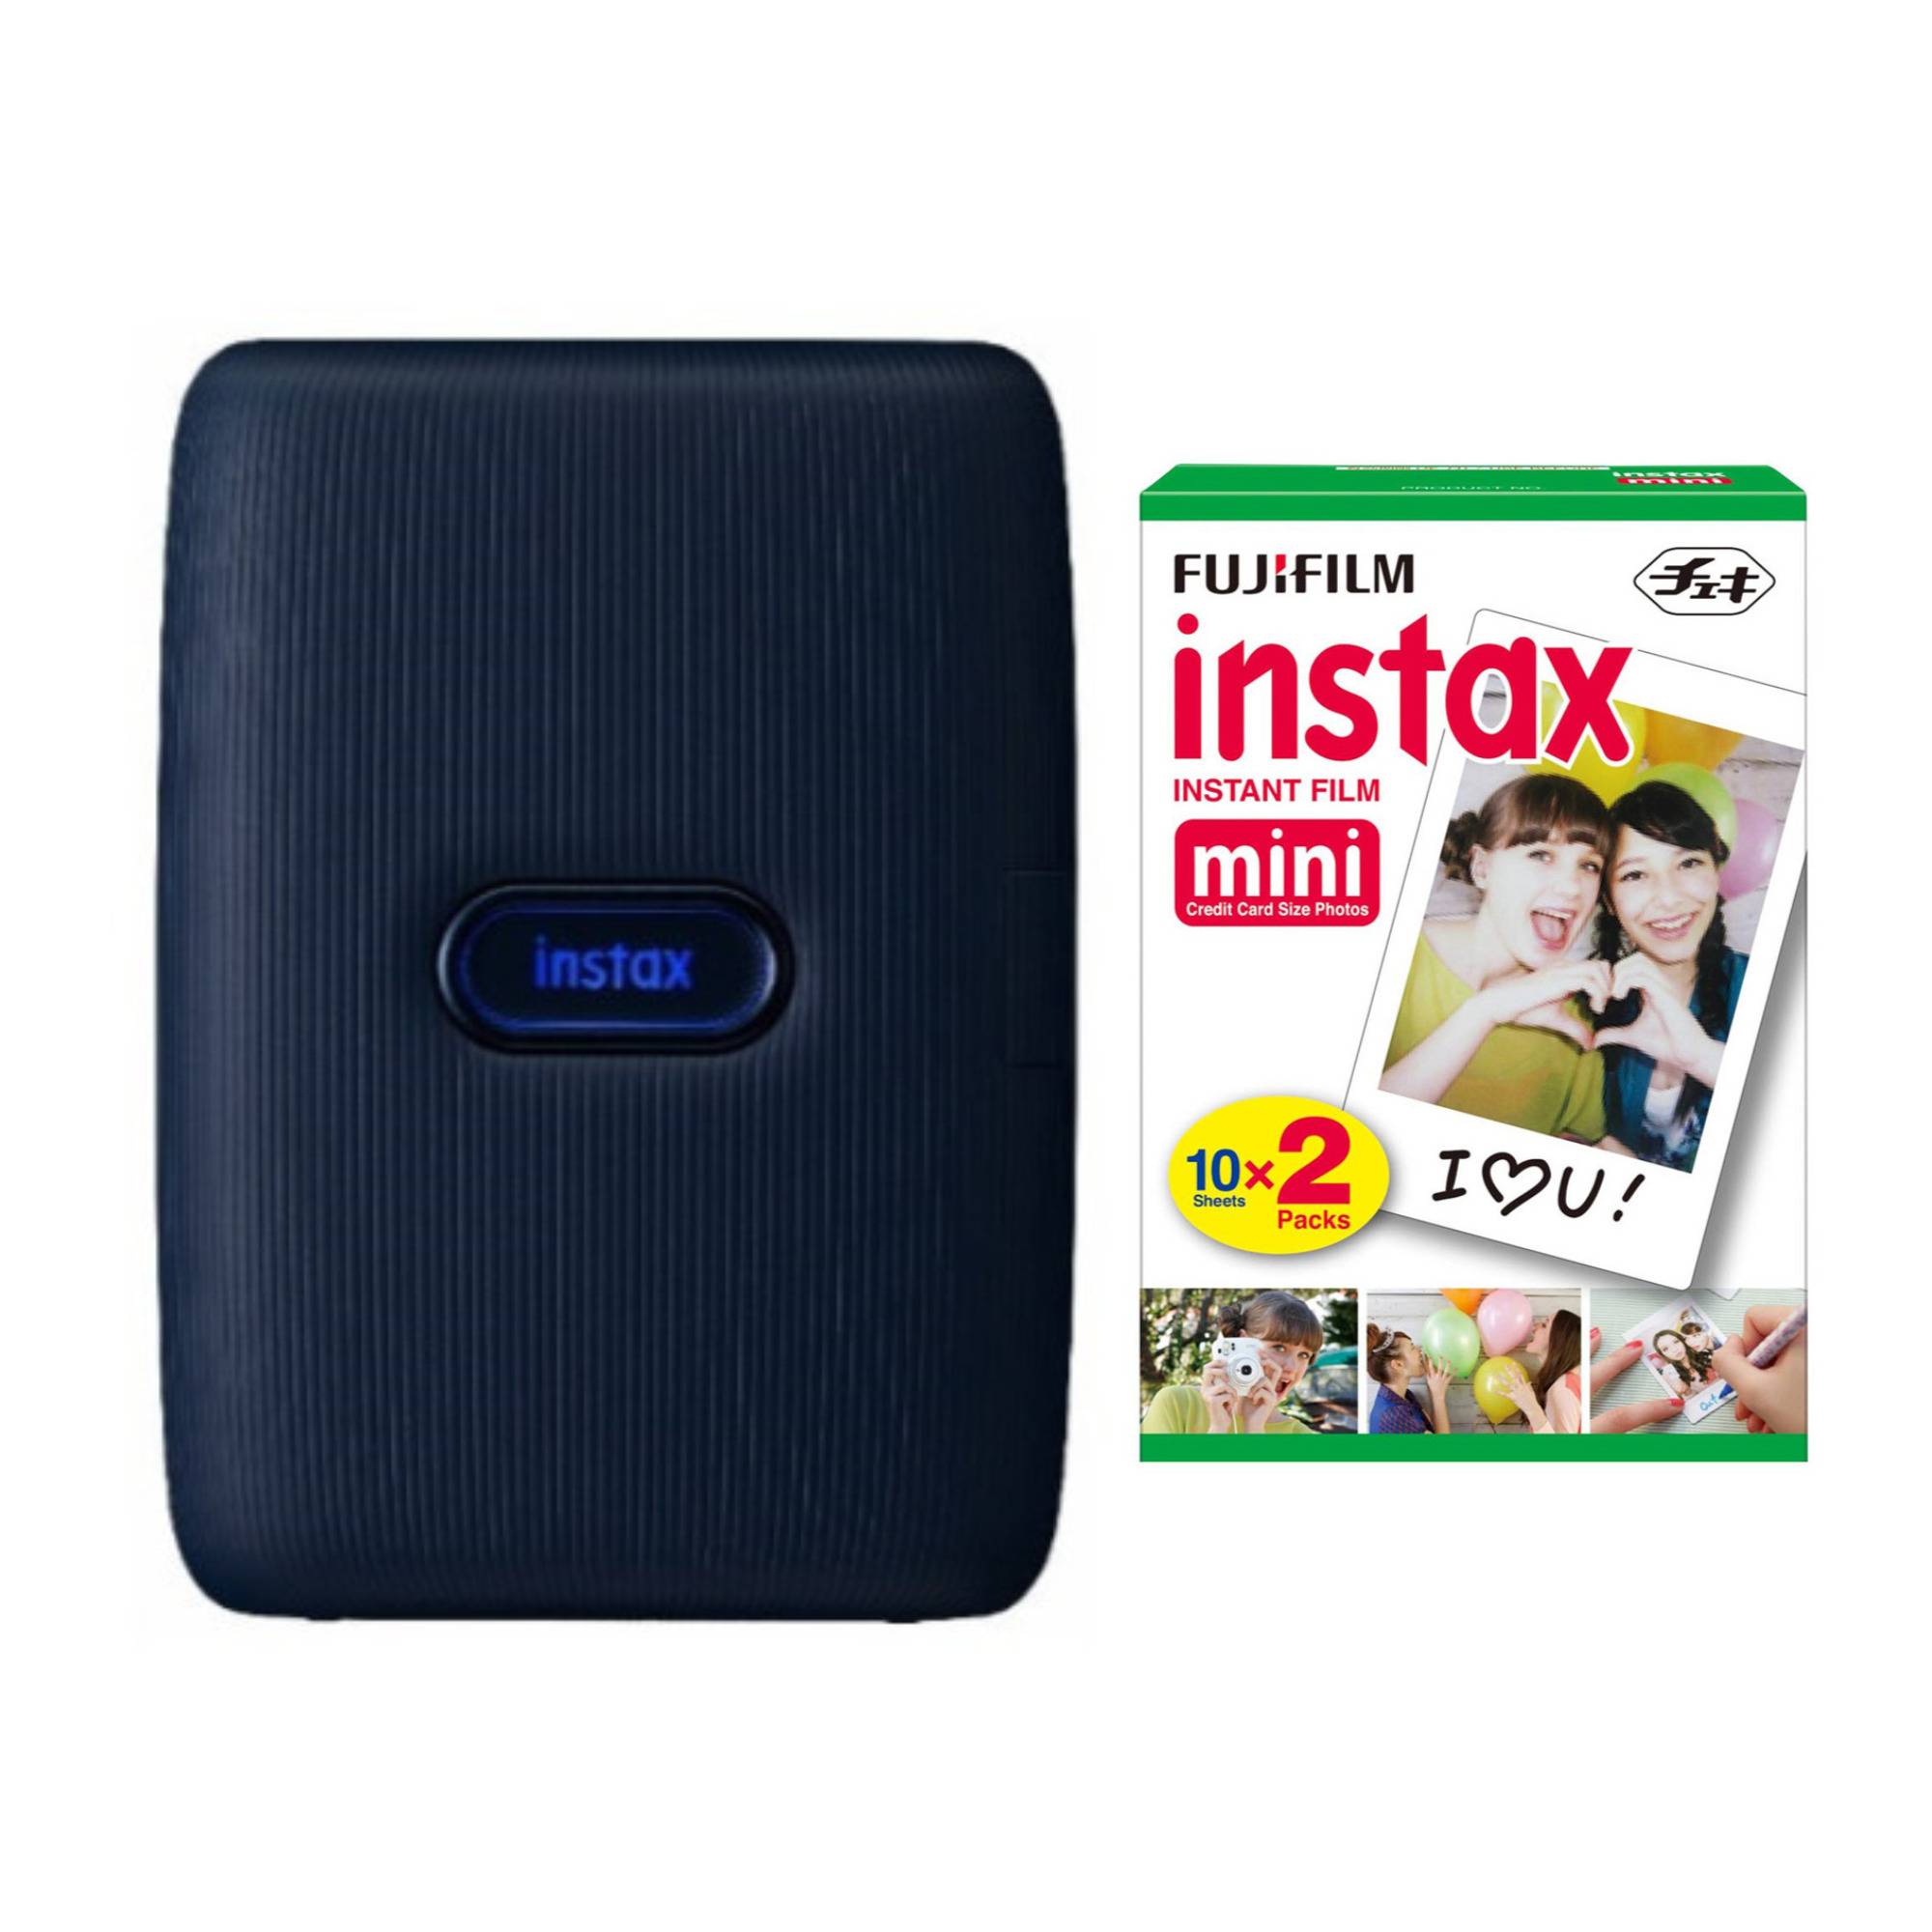 Fujifilm Instax Mini Link Instant Smartphone Printer (Dark Denim) with Two Fujifilm Instax Mini Film